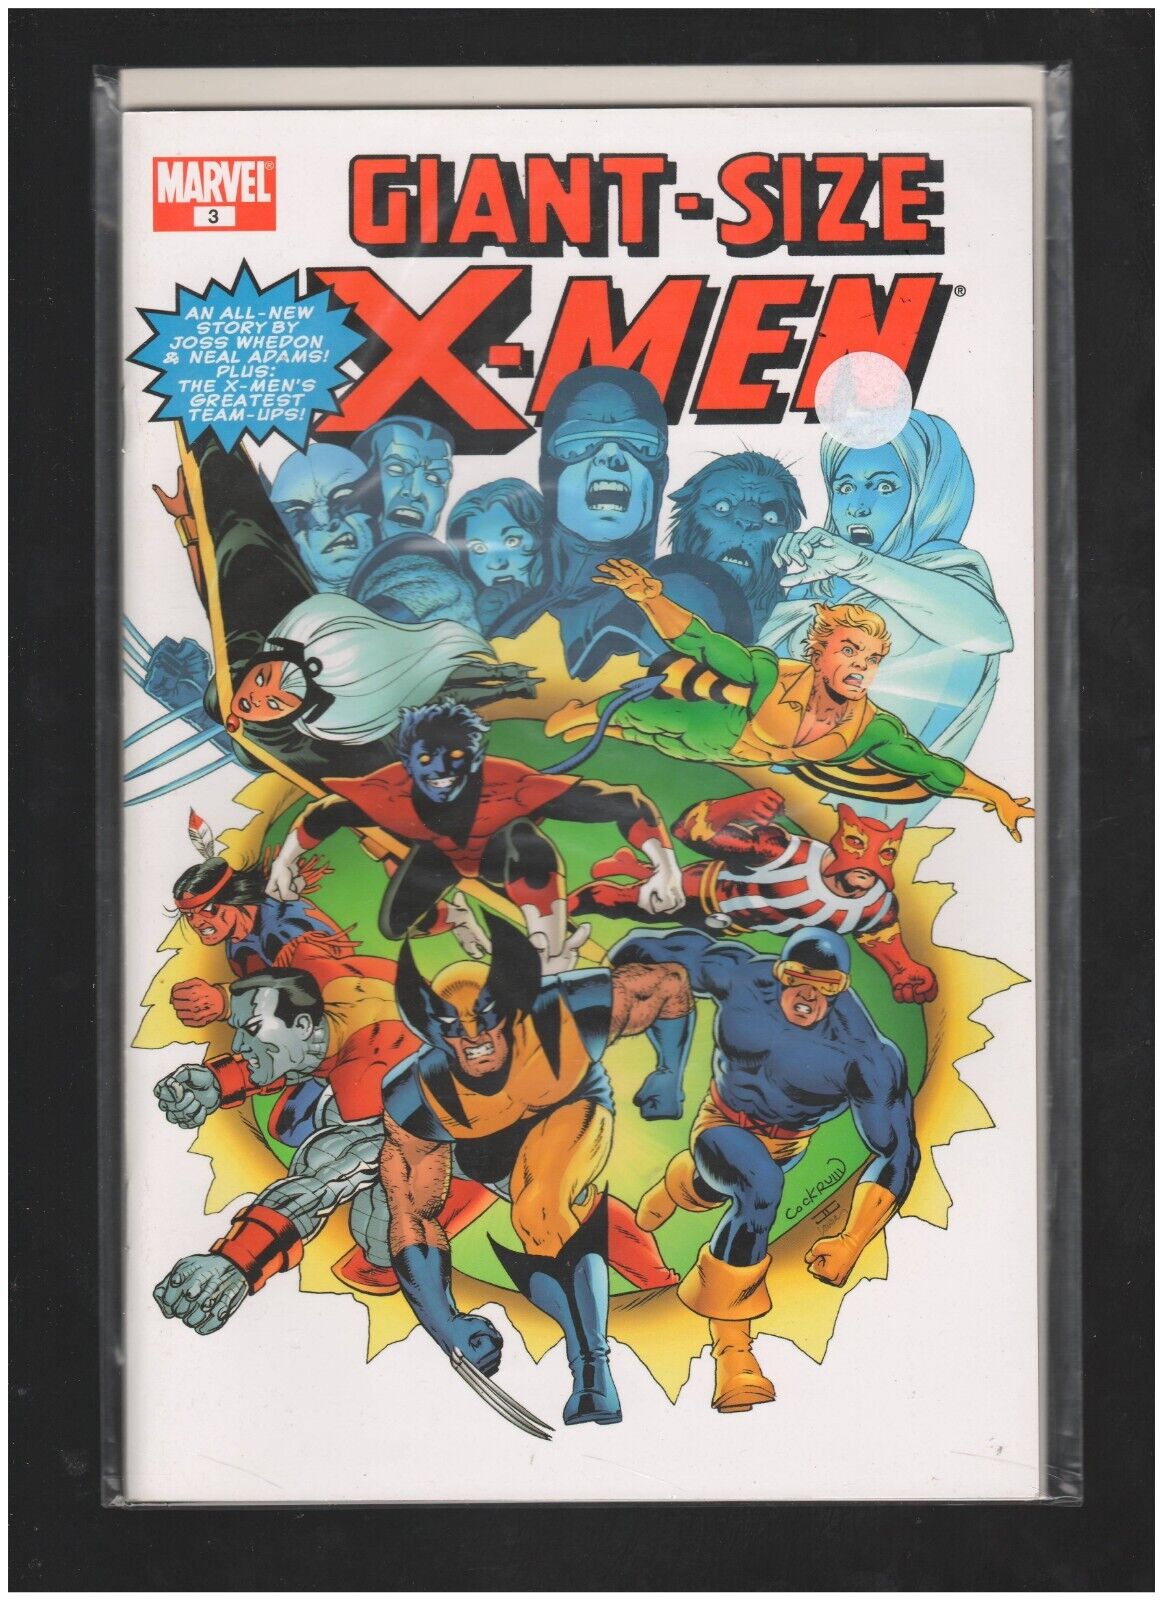 Uncanny Giant-Size X-Men #3 Marvel Comics 2005 MCU